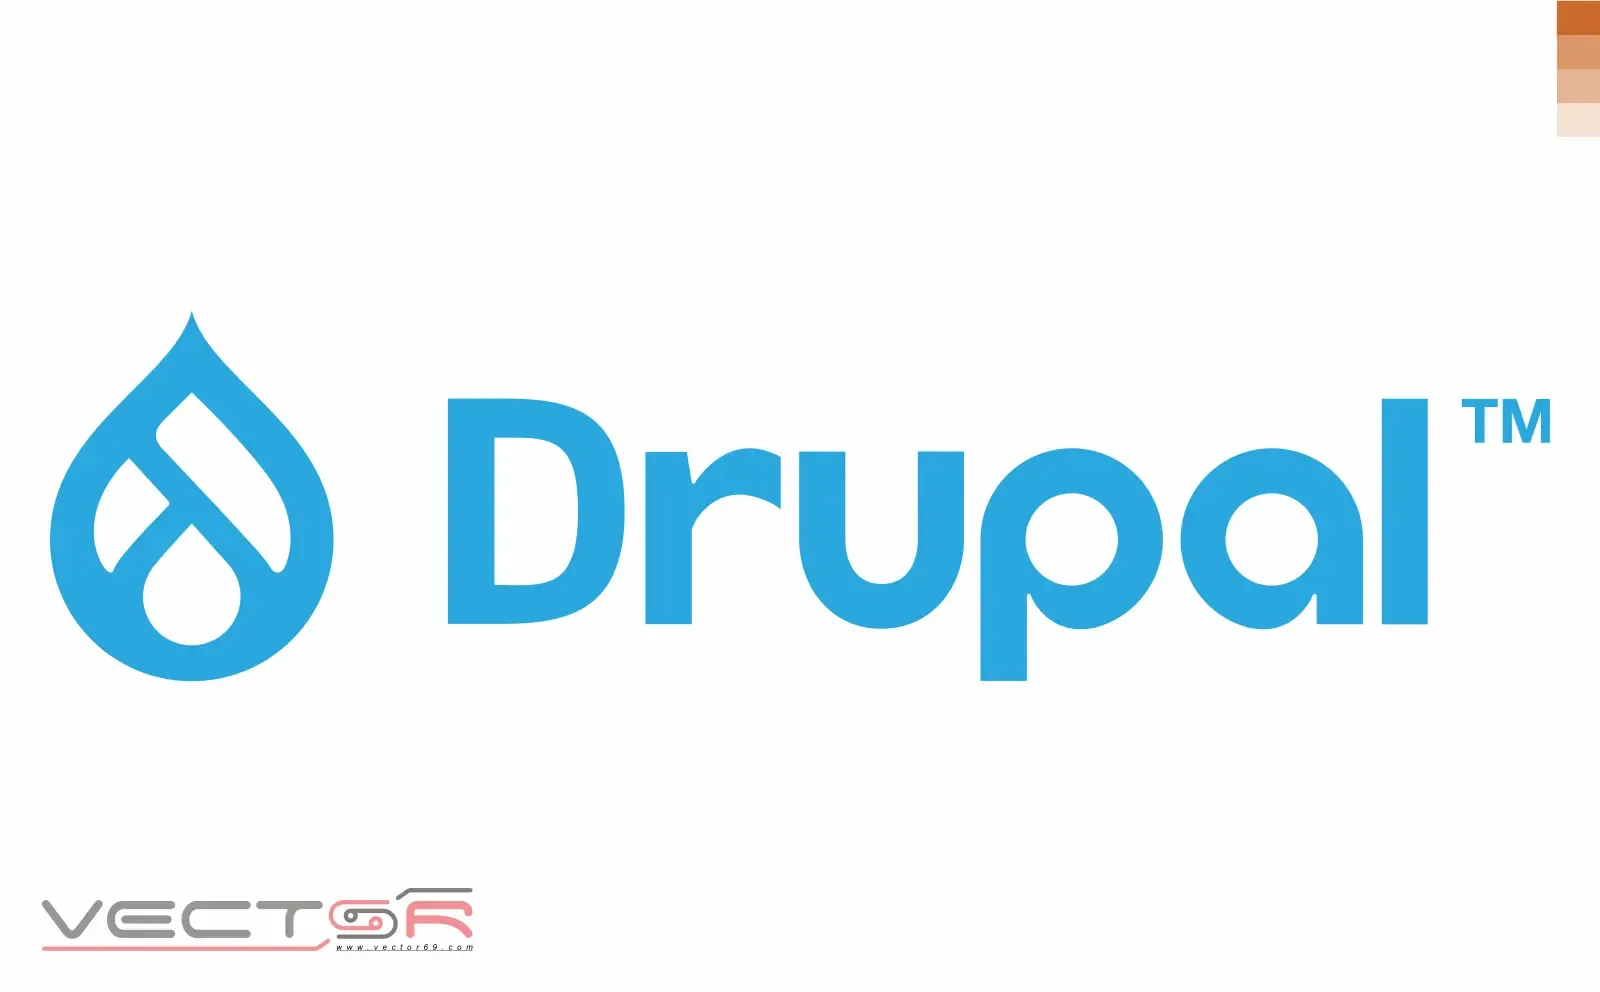 Drupal Logo - Download Vector File AI (Adobe Illustrator)